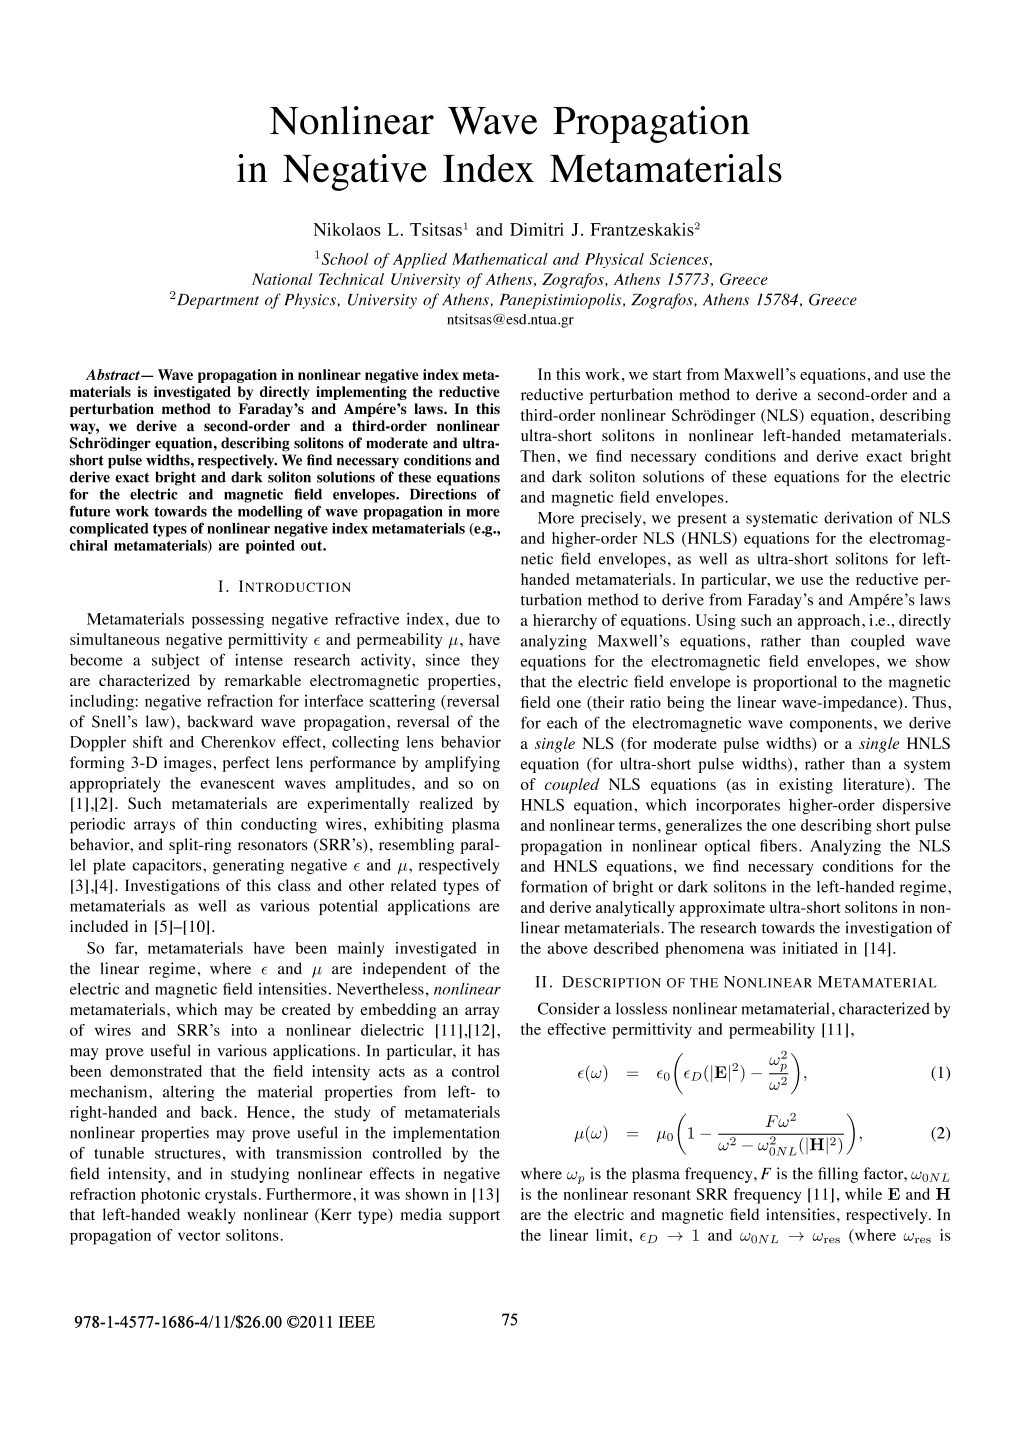 Nonlinear Wave Propagation in Negative Index Metamaterials